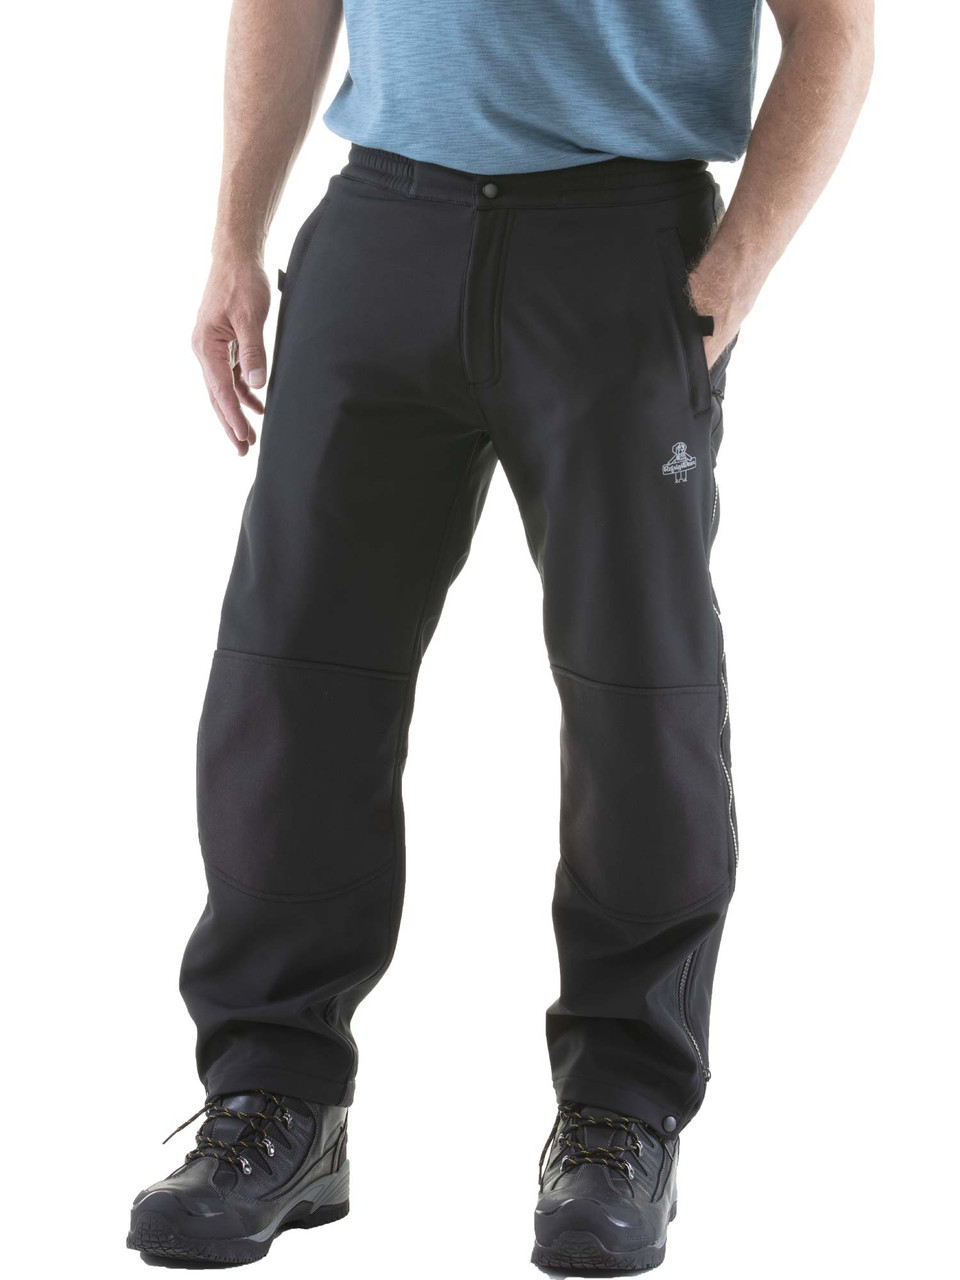 Refrigiwear Insulated Softshell Pants, Size: 2XL, Black